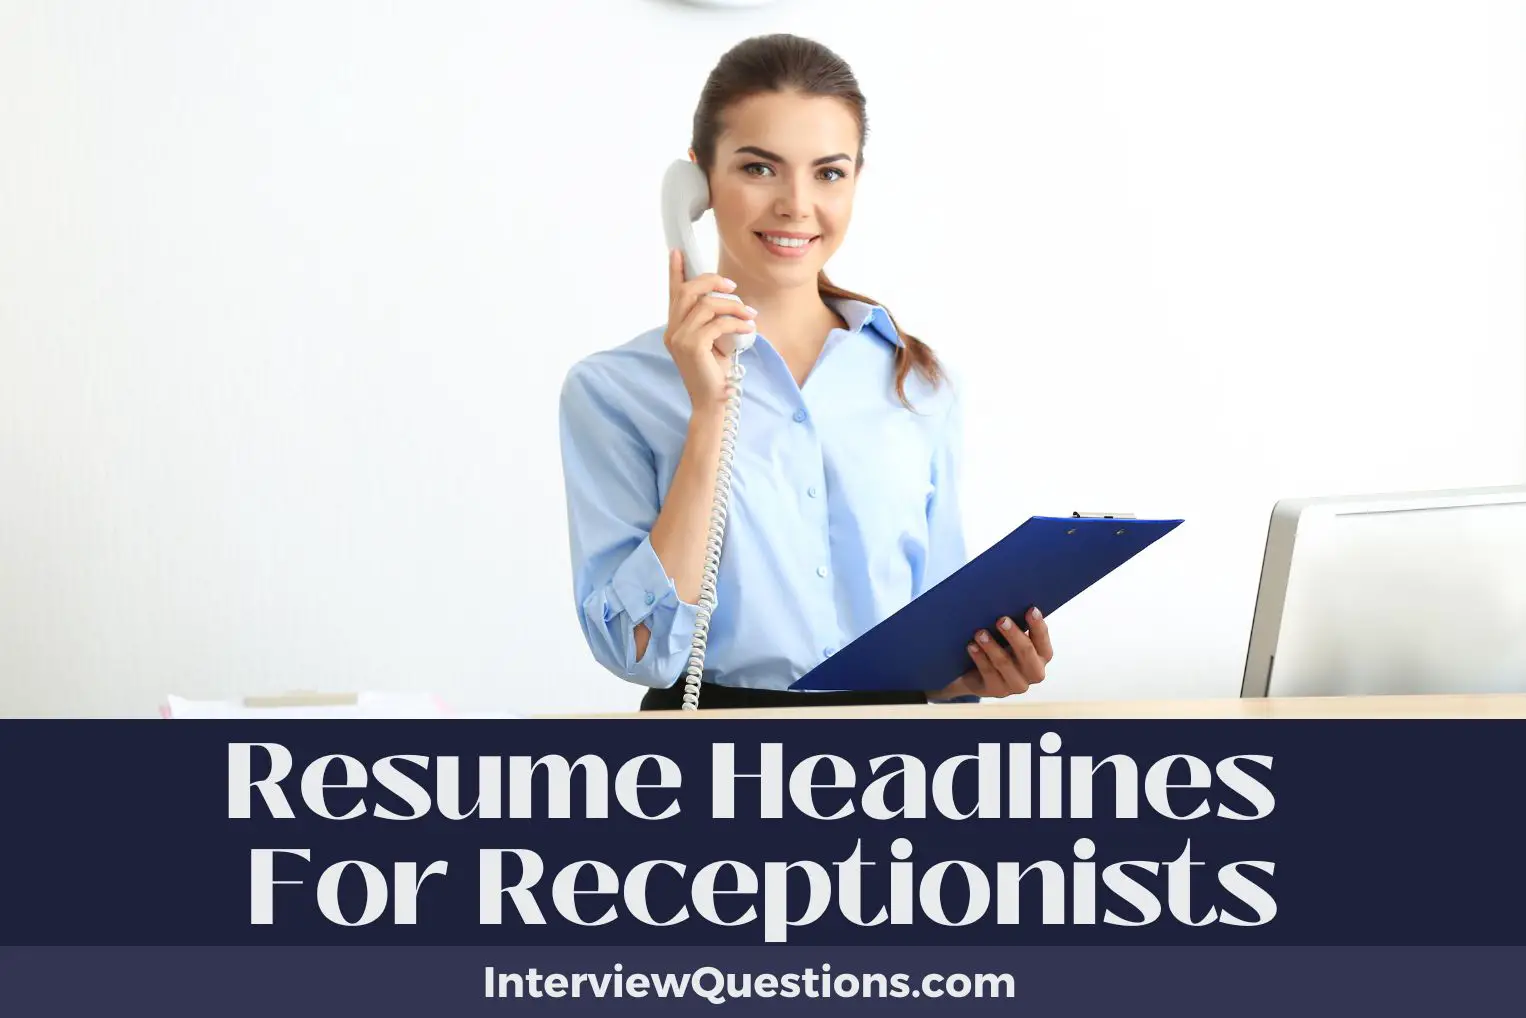 Resume Headlines For Receptionists